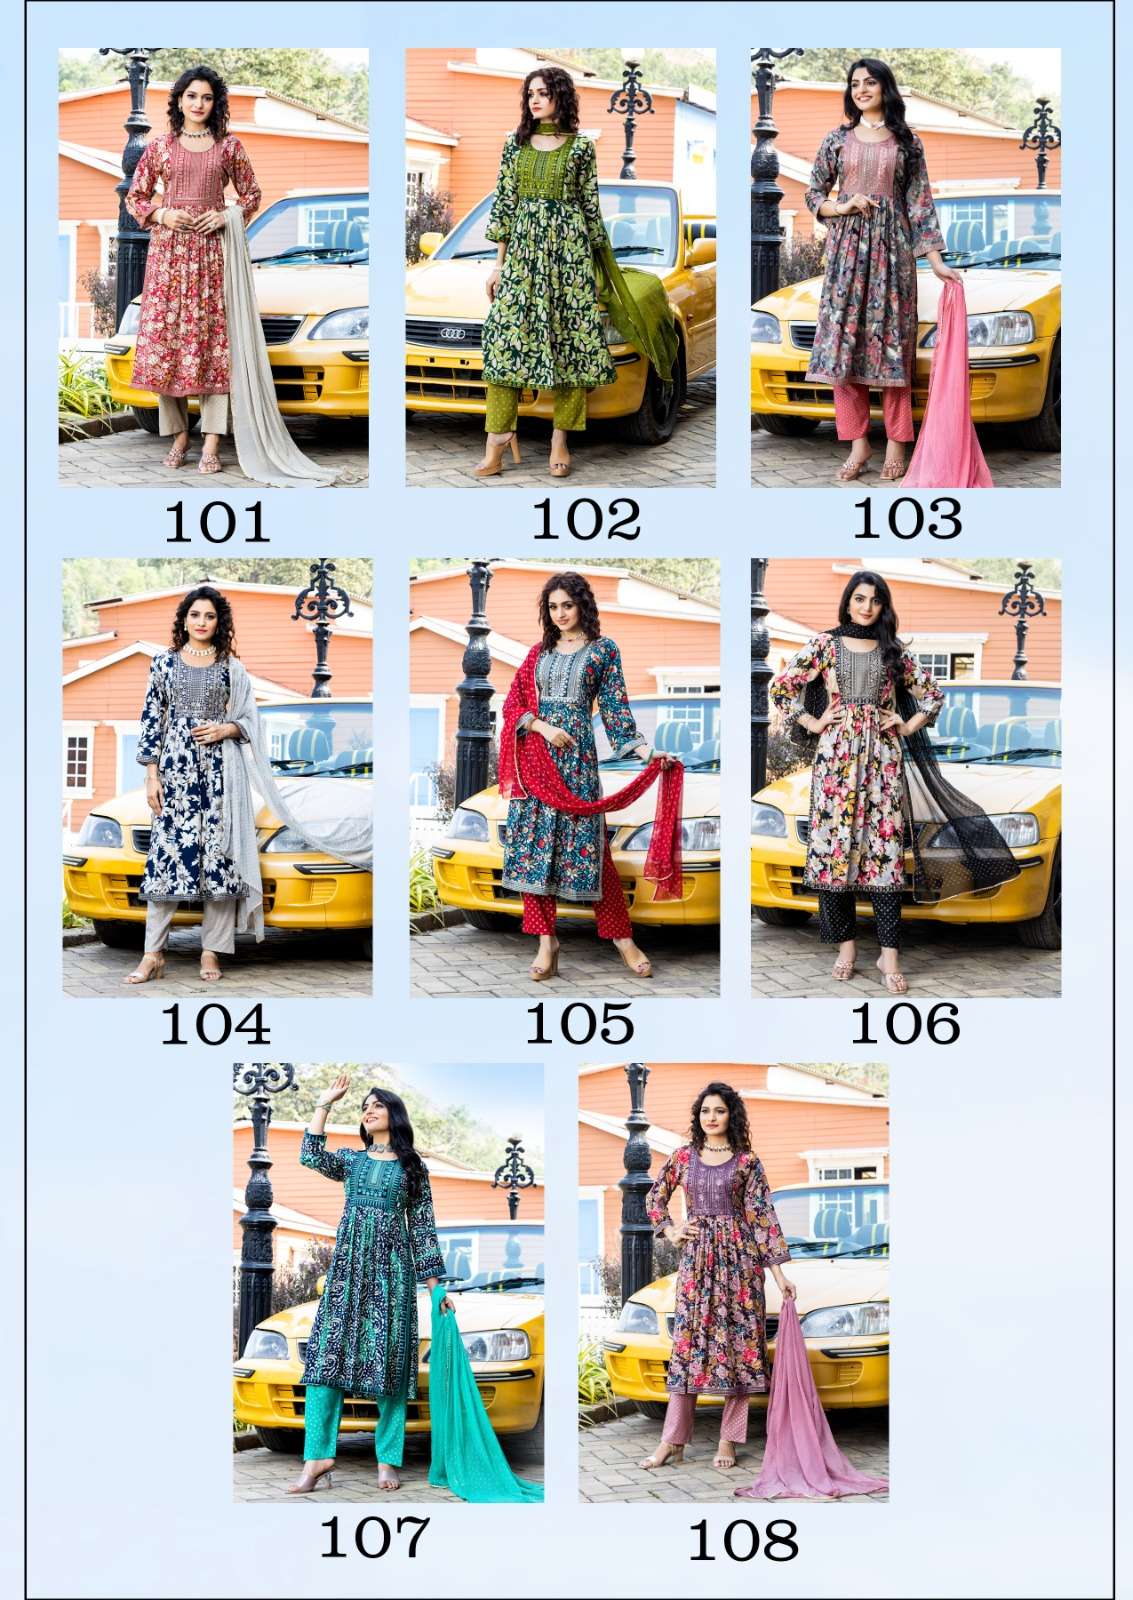 master block buster 1001-108 series rayon designer festive wear nayra cut kurti set ar wholesaler rate  india gujarat